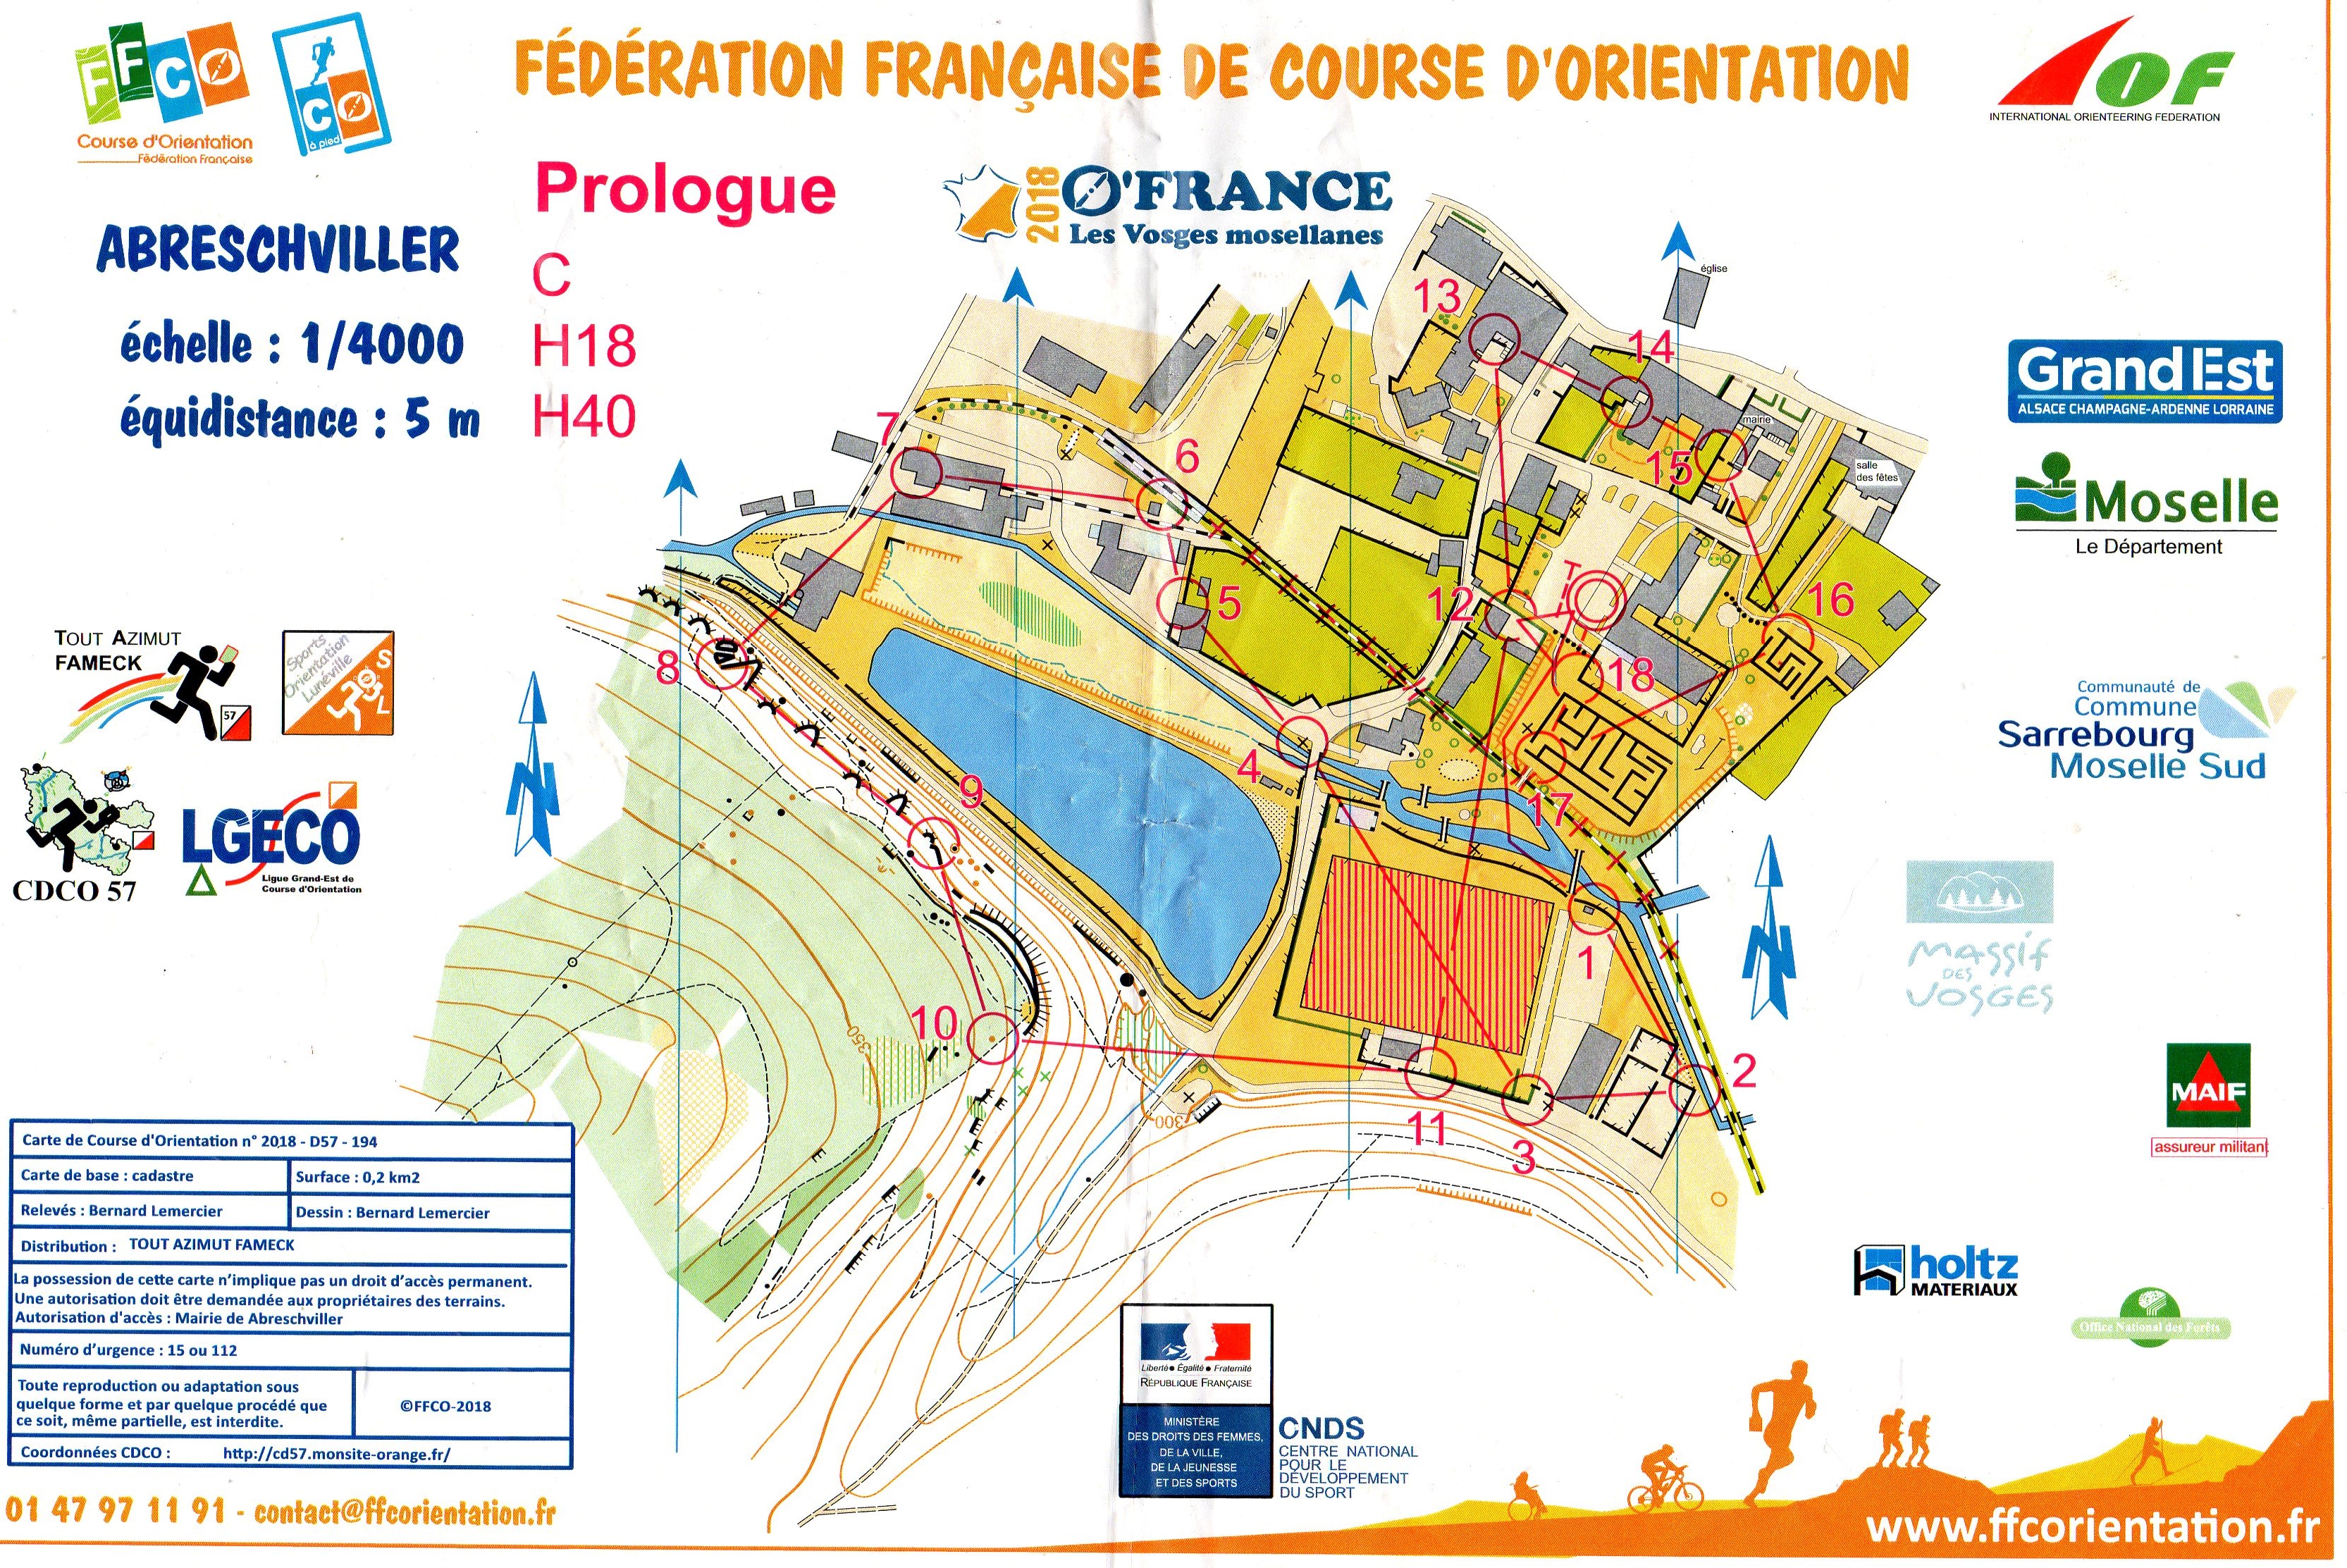 Prologue O'France 2018. Sprint (2018-07-08)